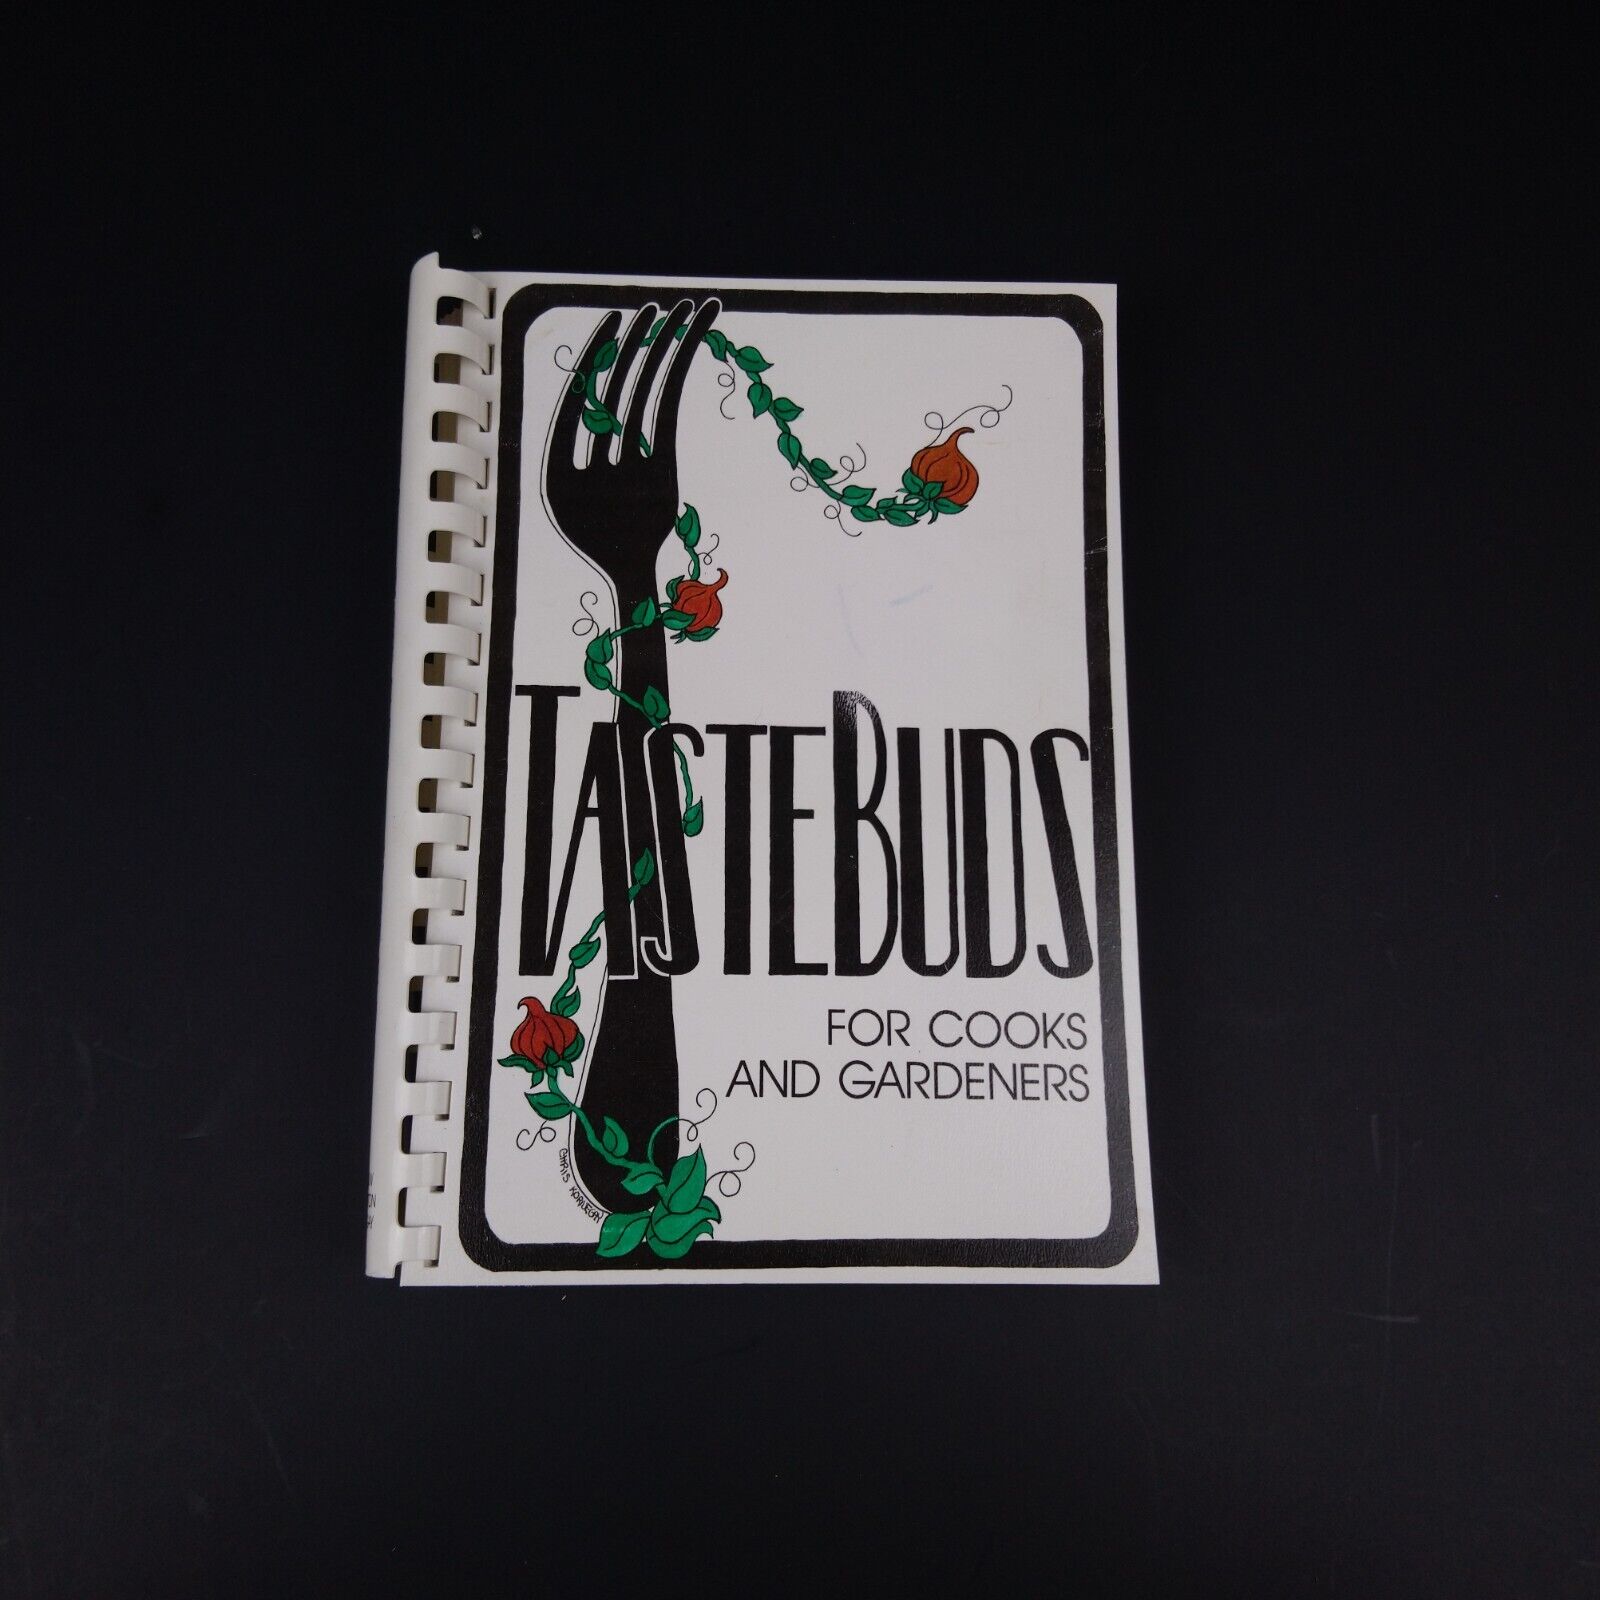 VTG 1985 Tastebuds For Cooks And Gardeners Cookbook By Jean Winslow & Edna H